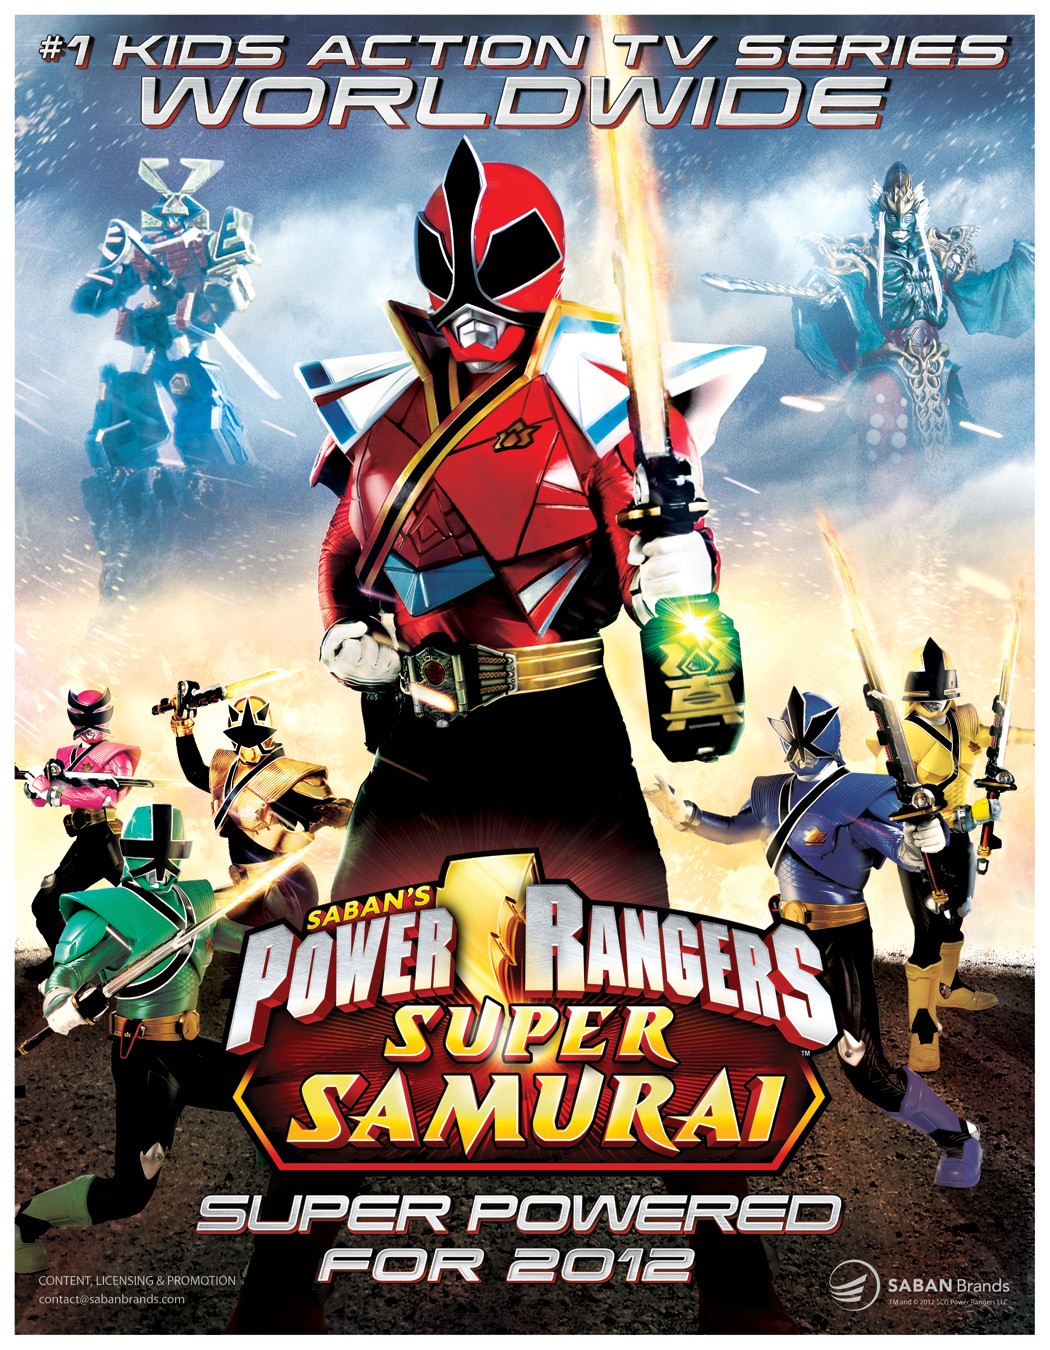 Extra Large TV Poster Image for Power Rangers Samurai 